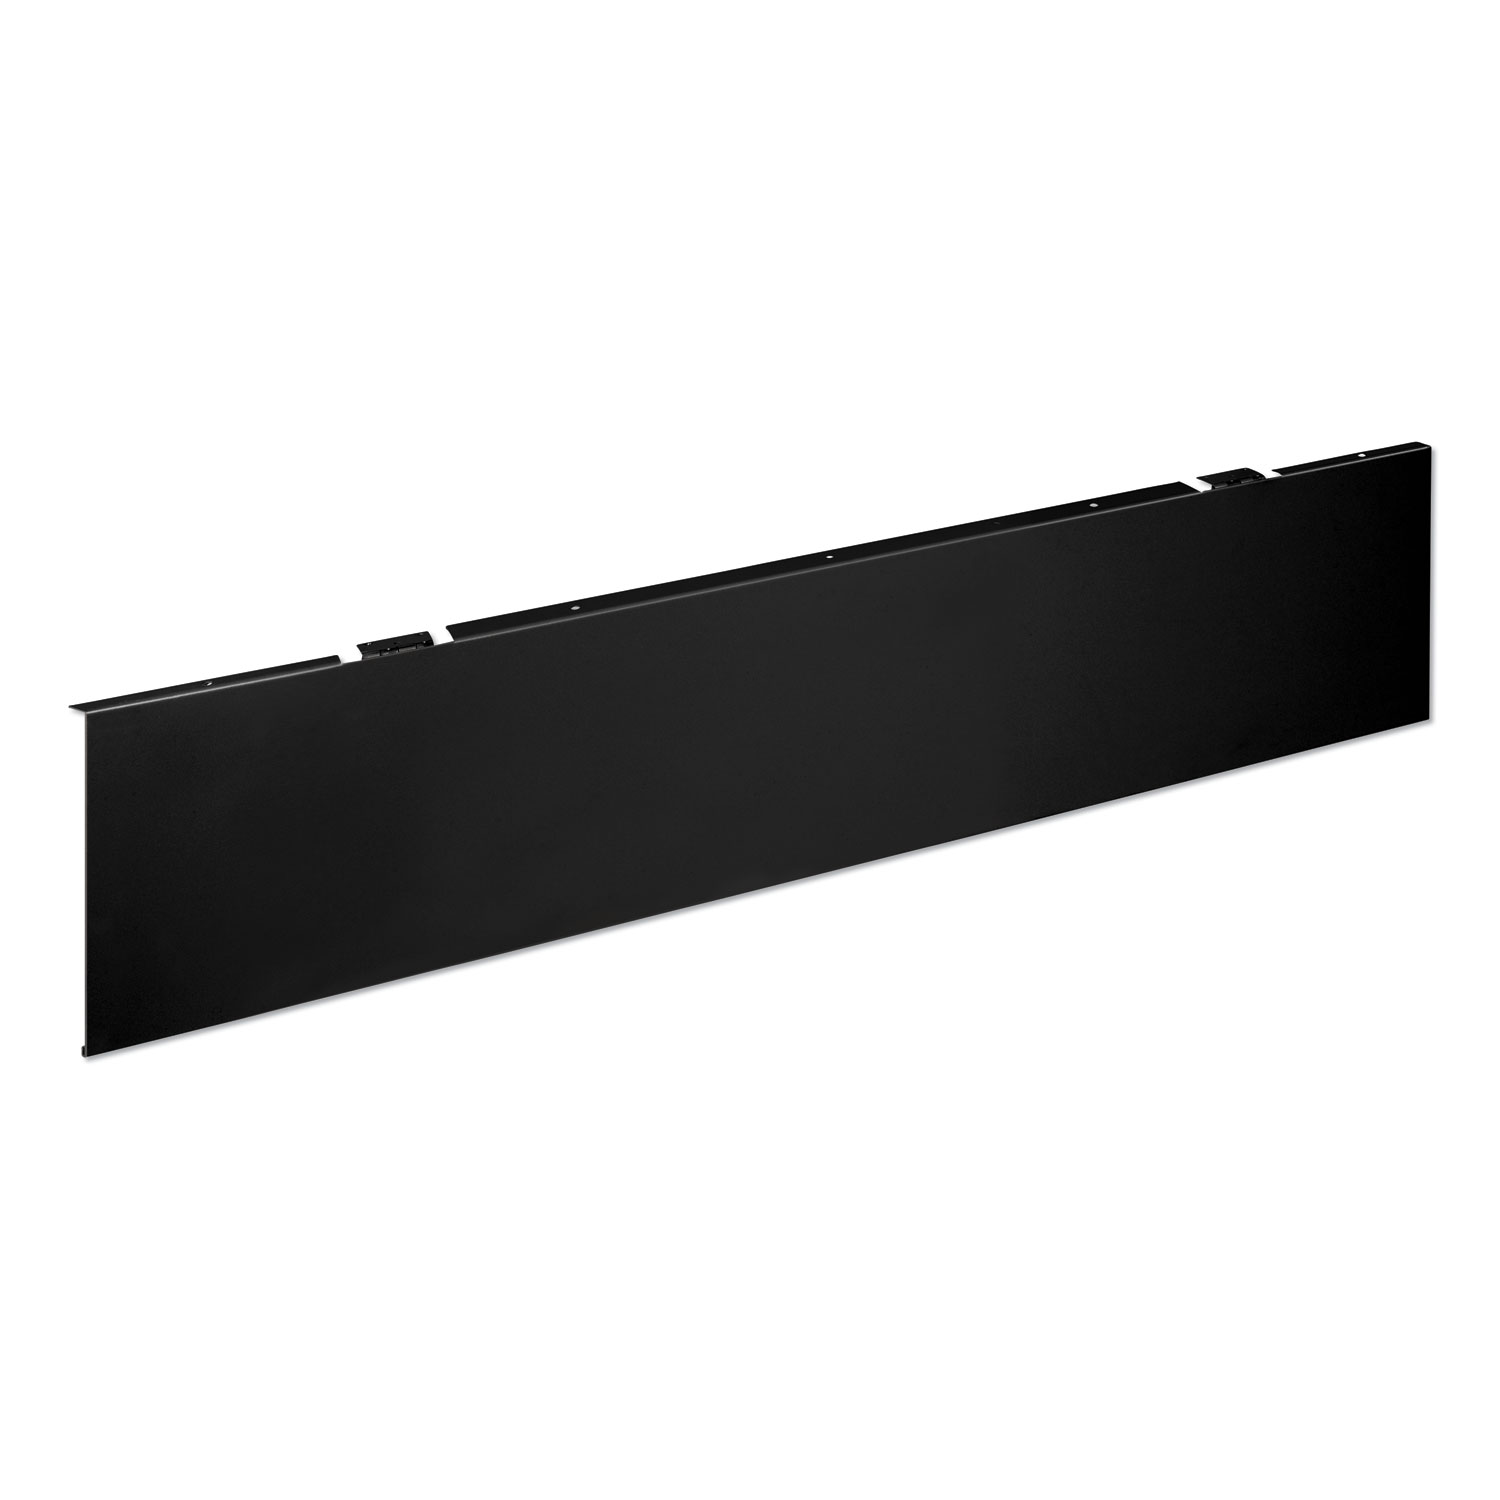  HON HONMTUMOD50P Universal Modesty Panel, 50w x 0.13d x 9.63h, Black (HONMTUMOD50P) 